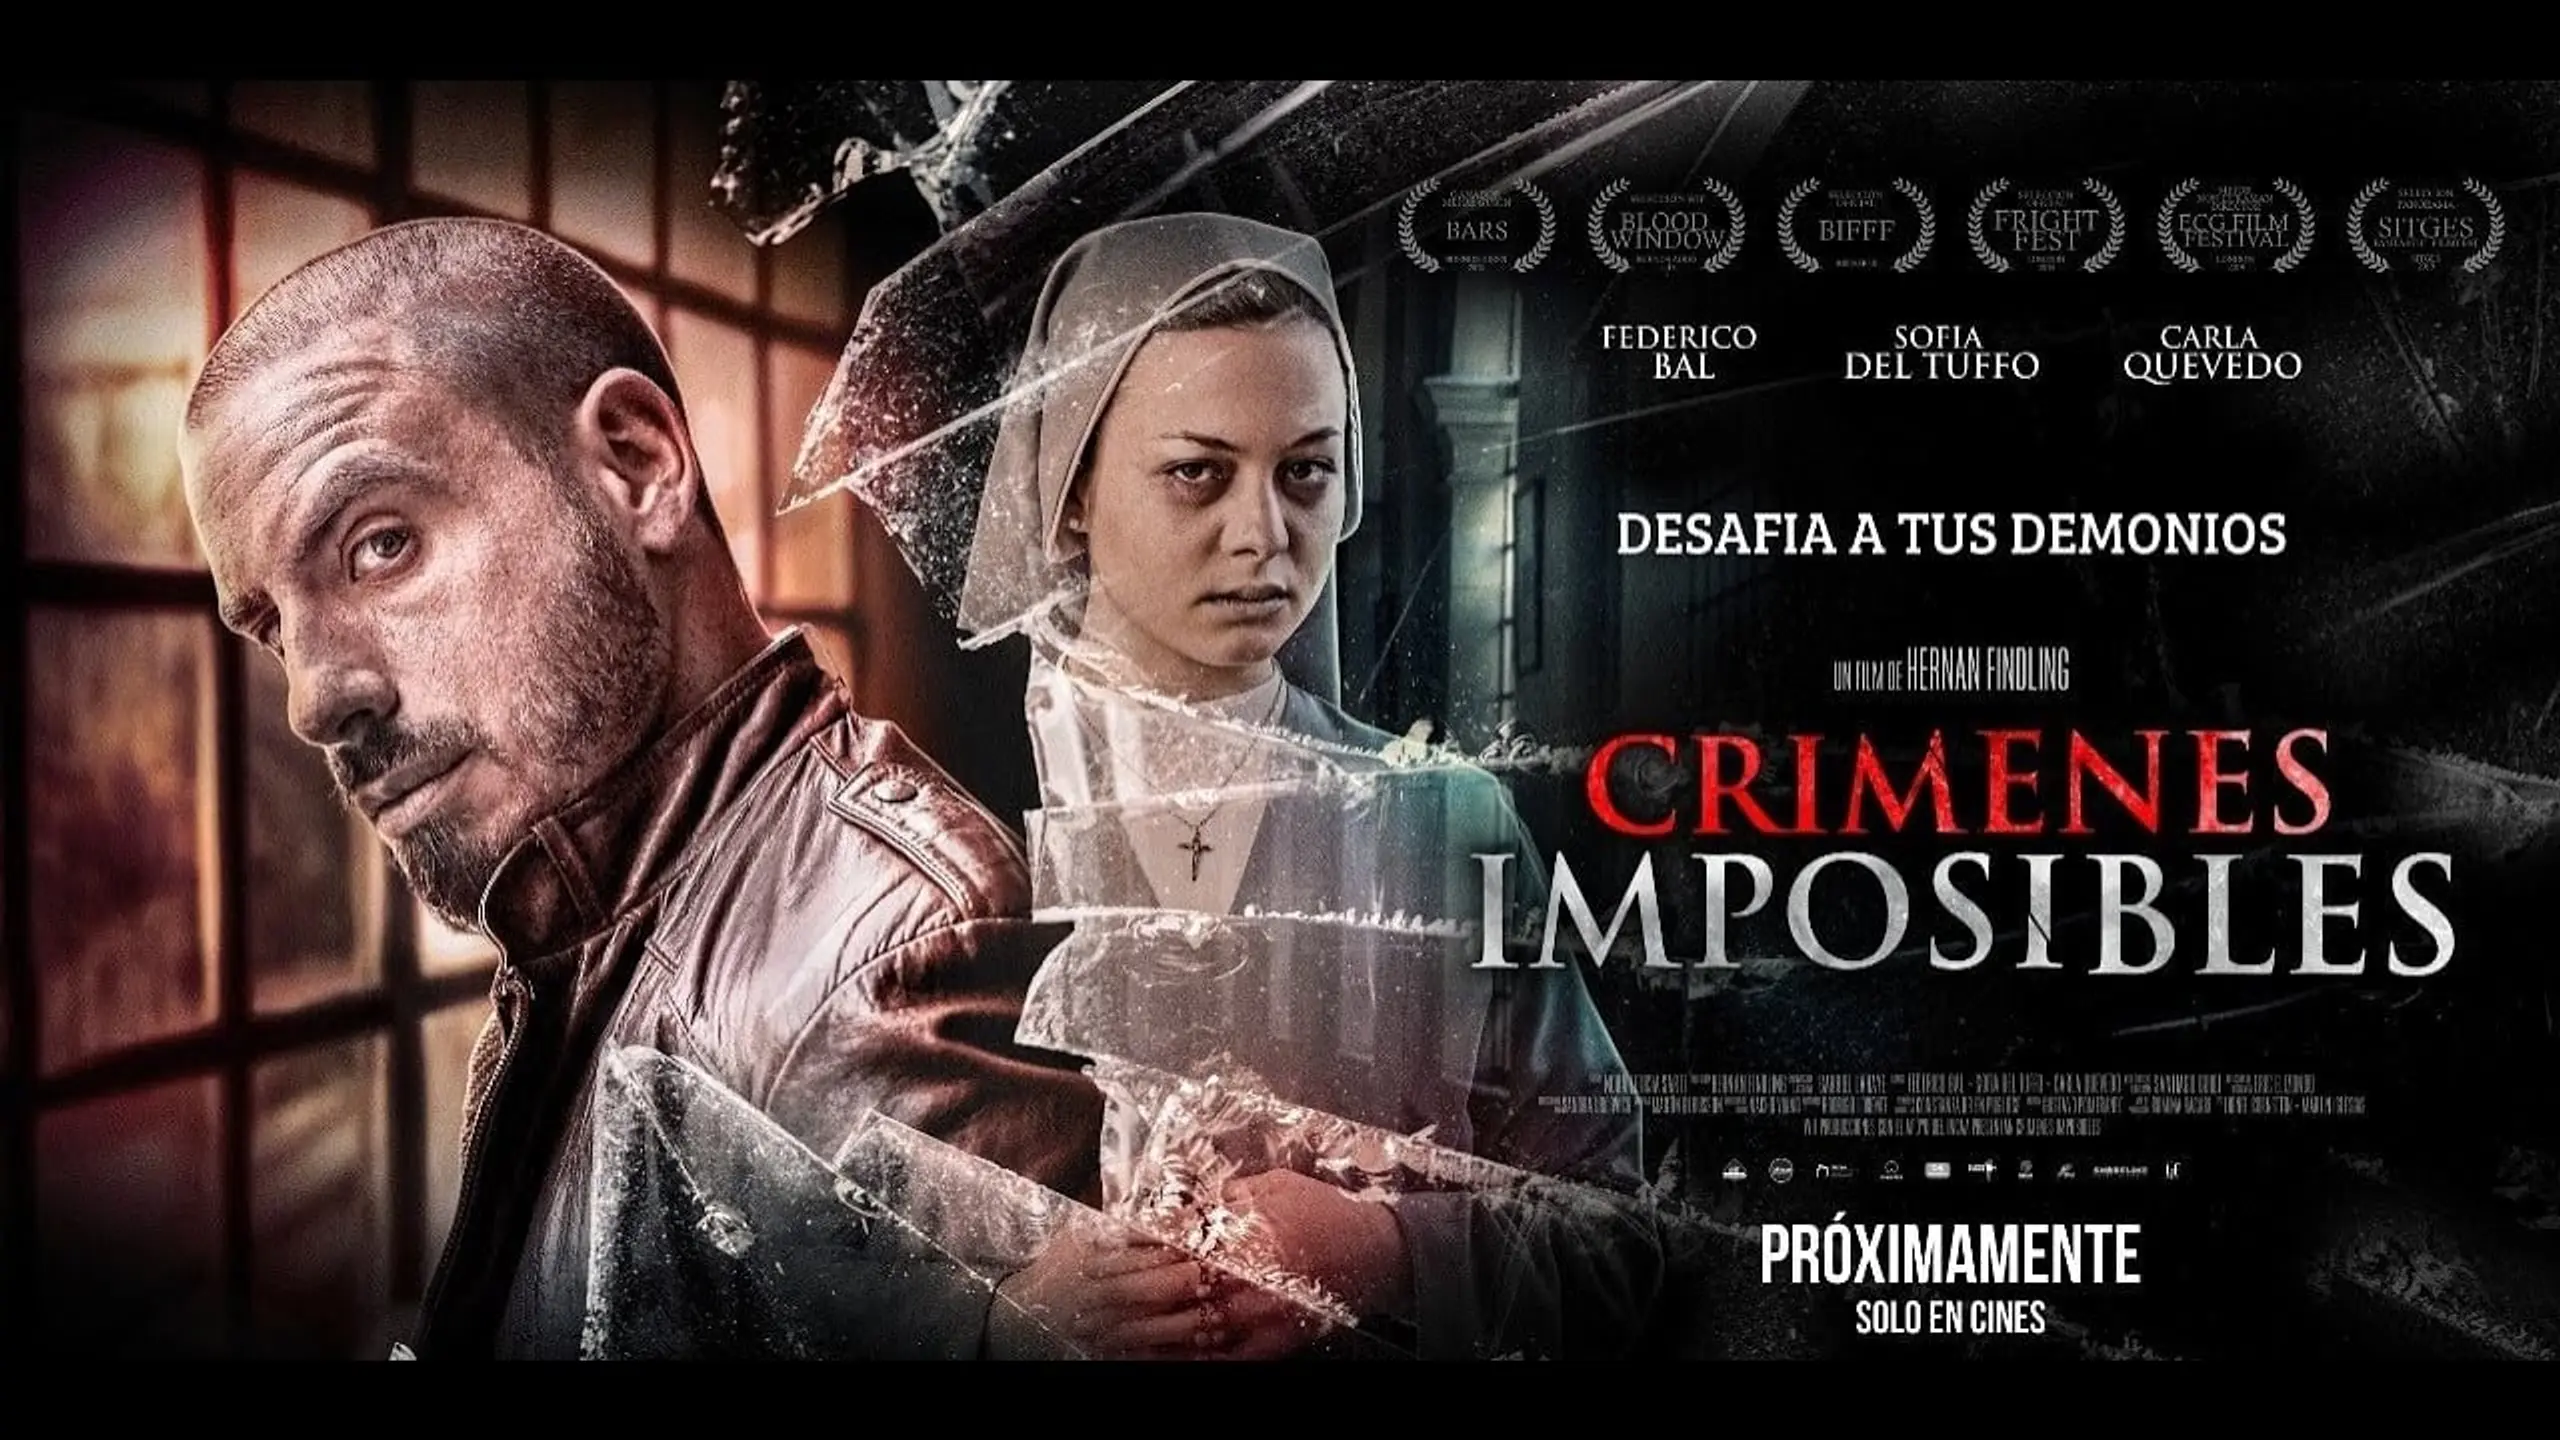 Impossible Crimes